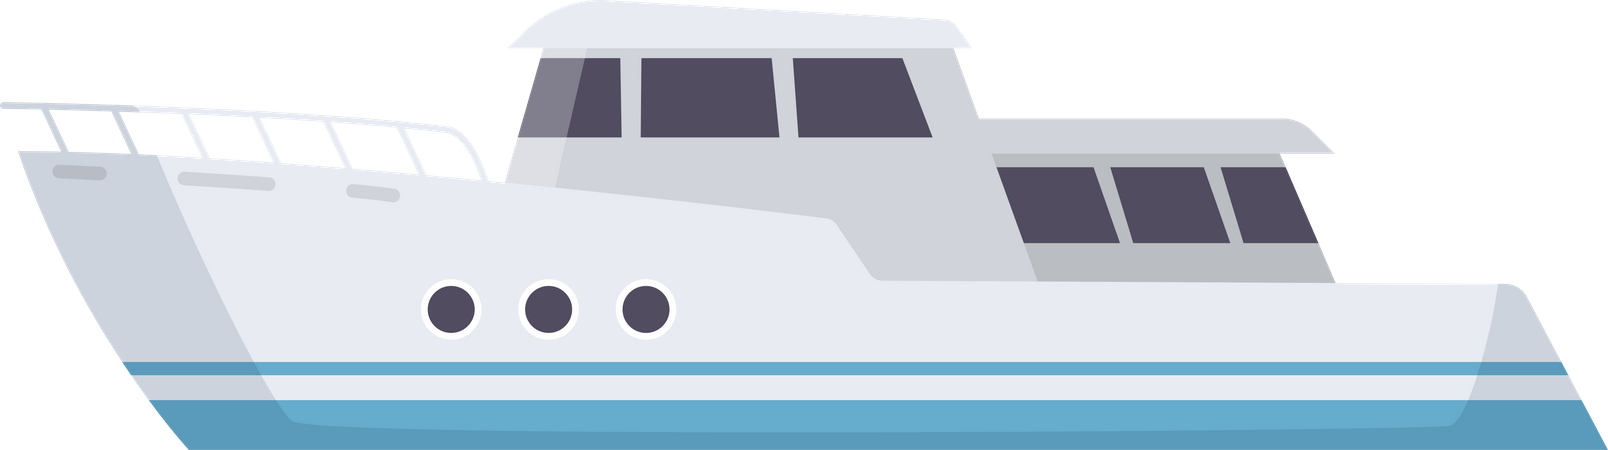 Sea Boat Illustration